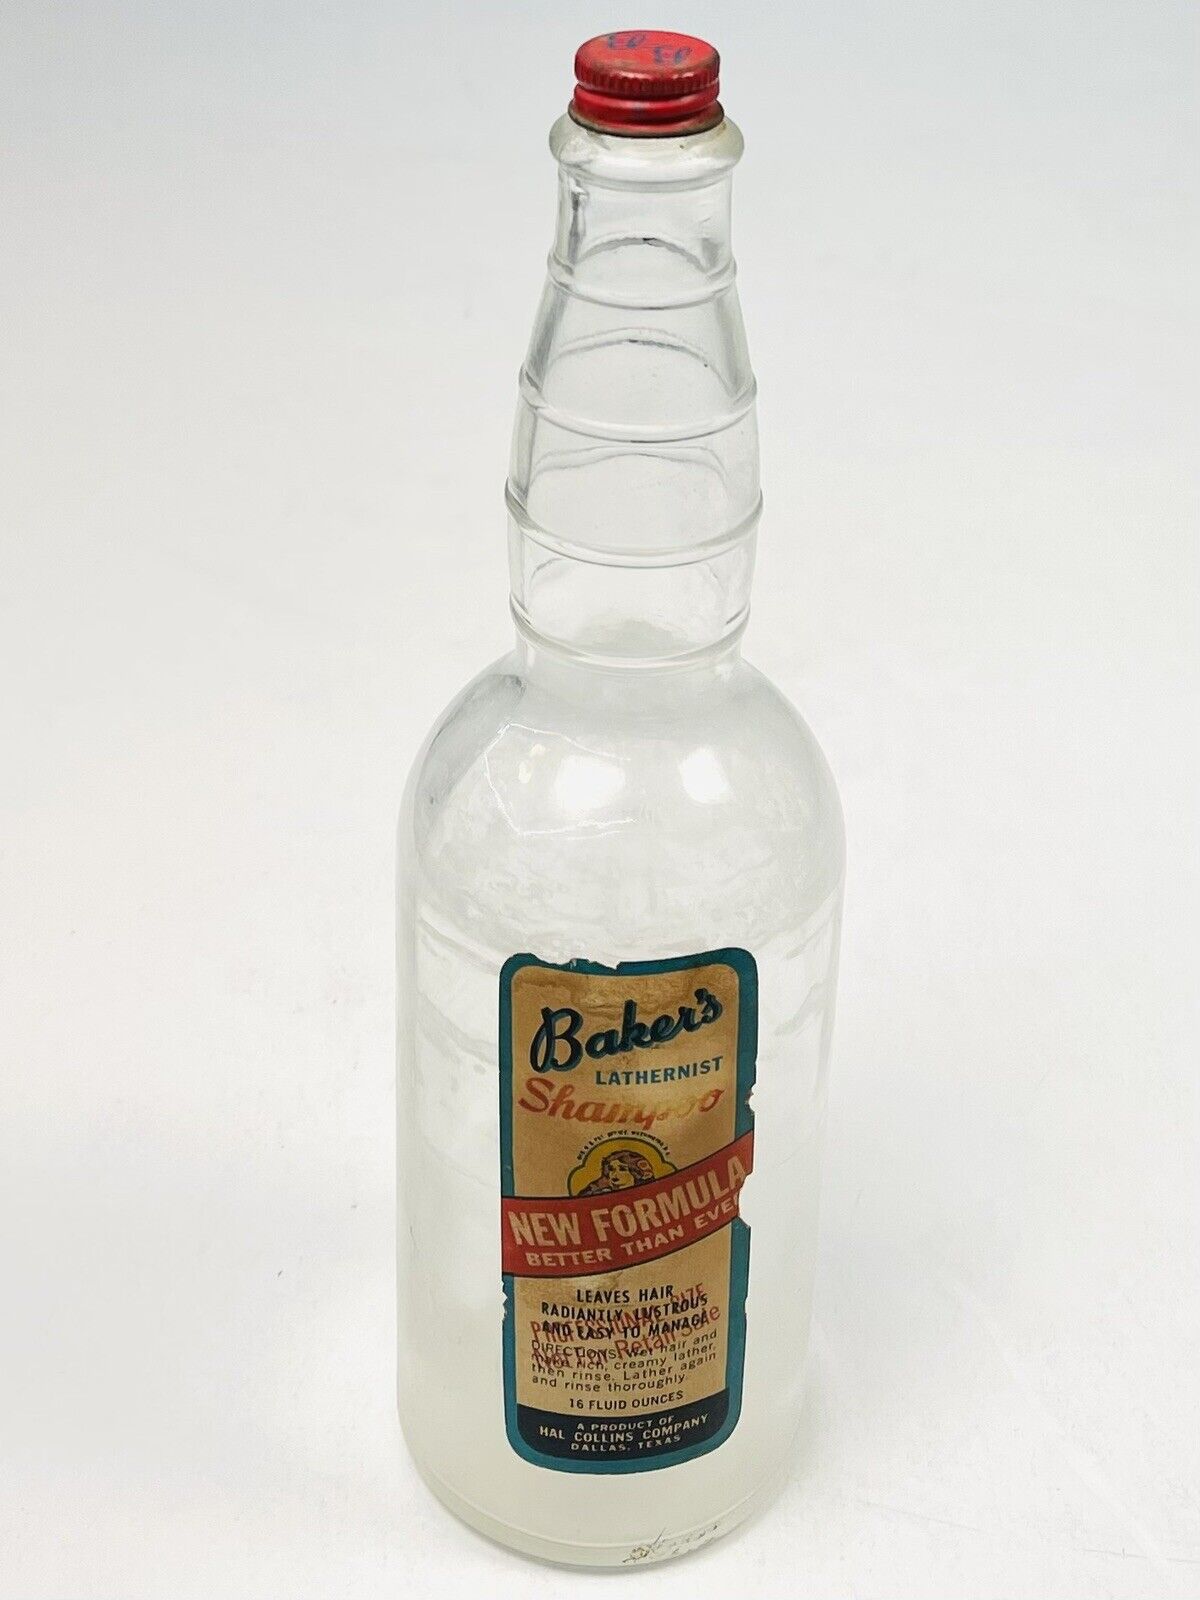 VTG Professional Bottle BAKER'S LATHERNIST Shampoo Hal Collins Company Dallas TX